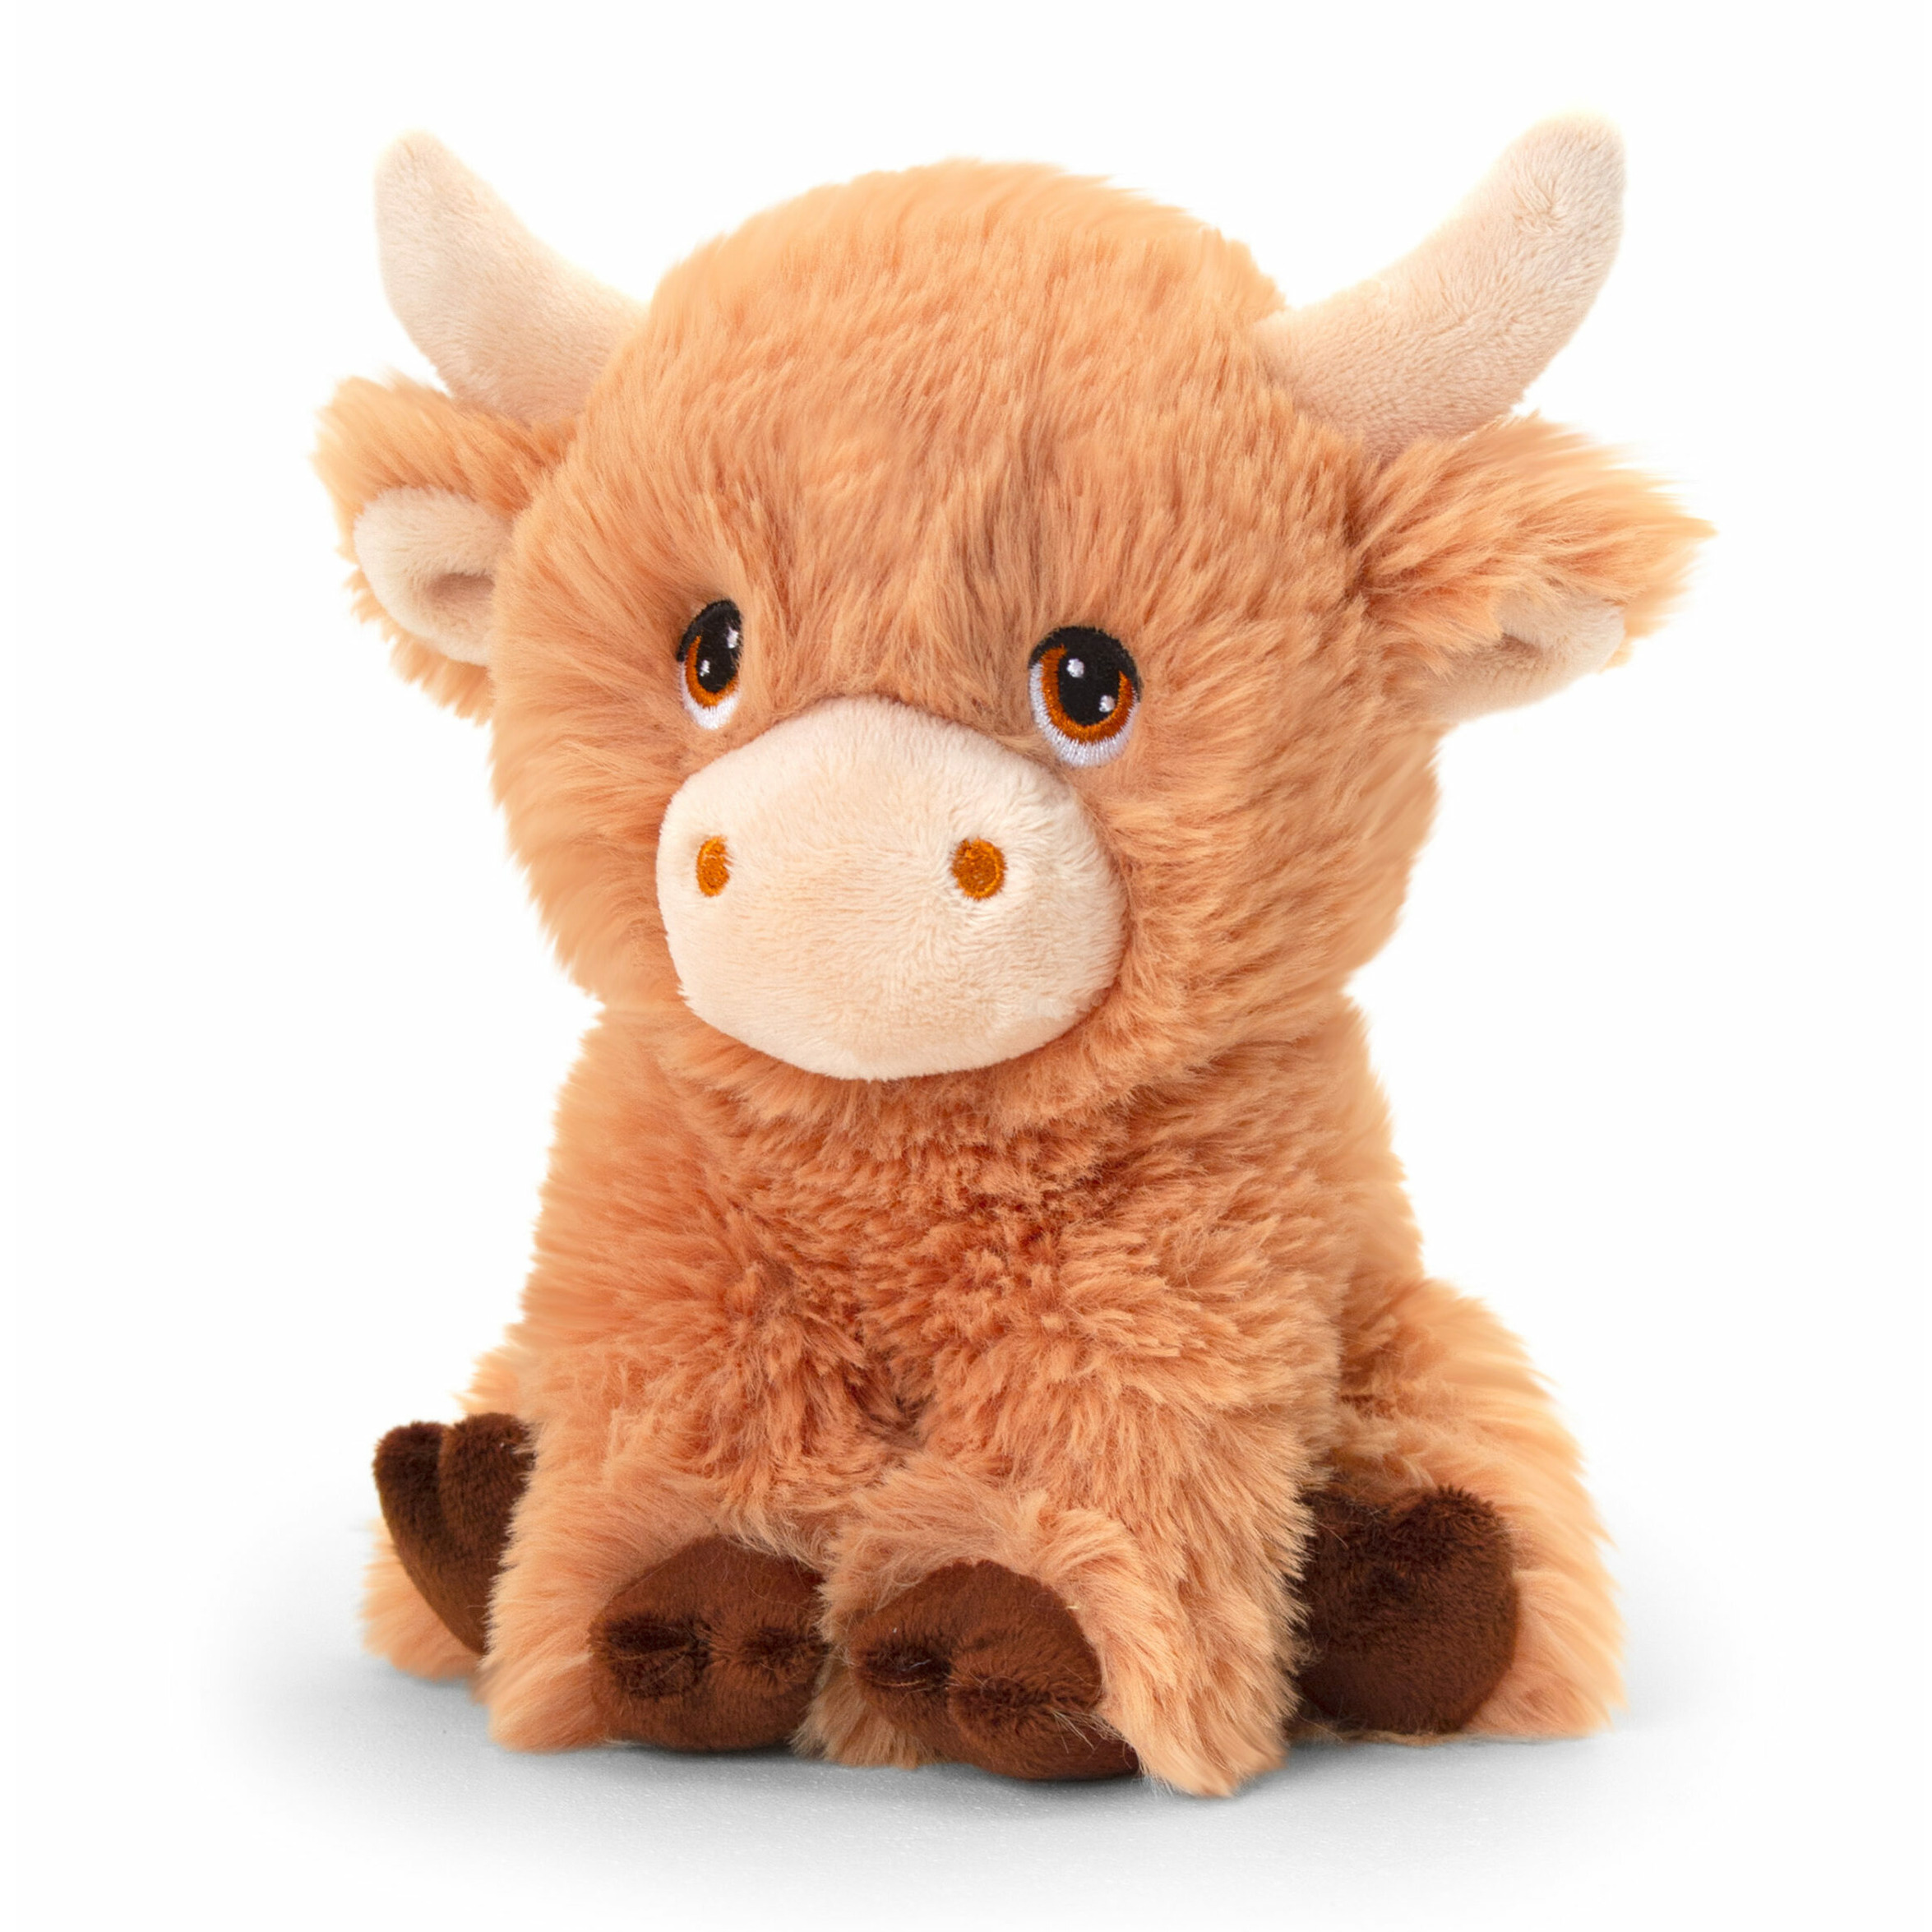 Keel Toys pluche koe met hoorns knuffeldier - bruin - zittend - 25 cm